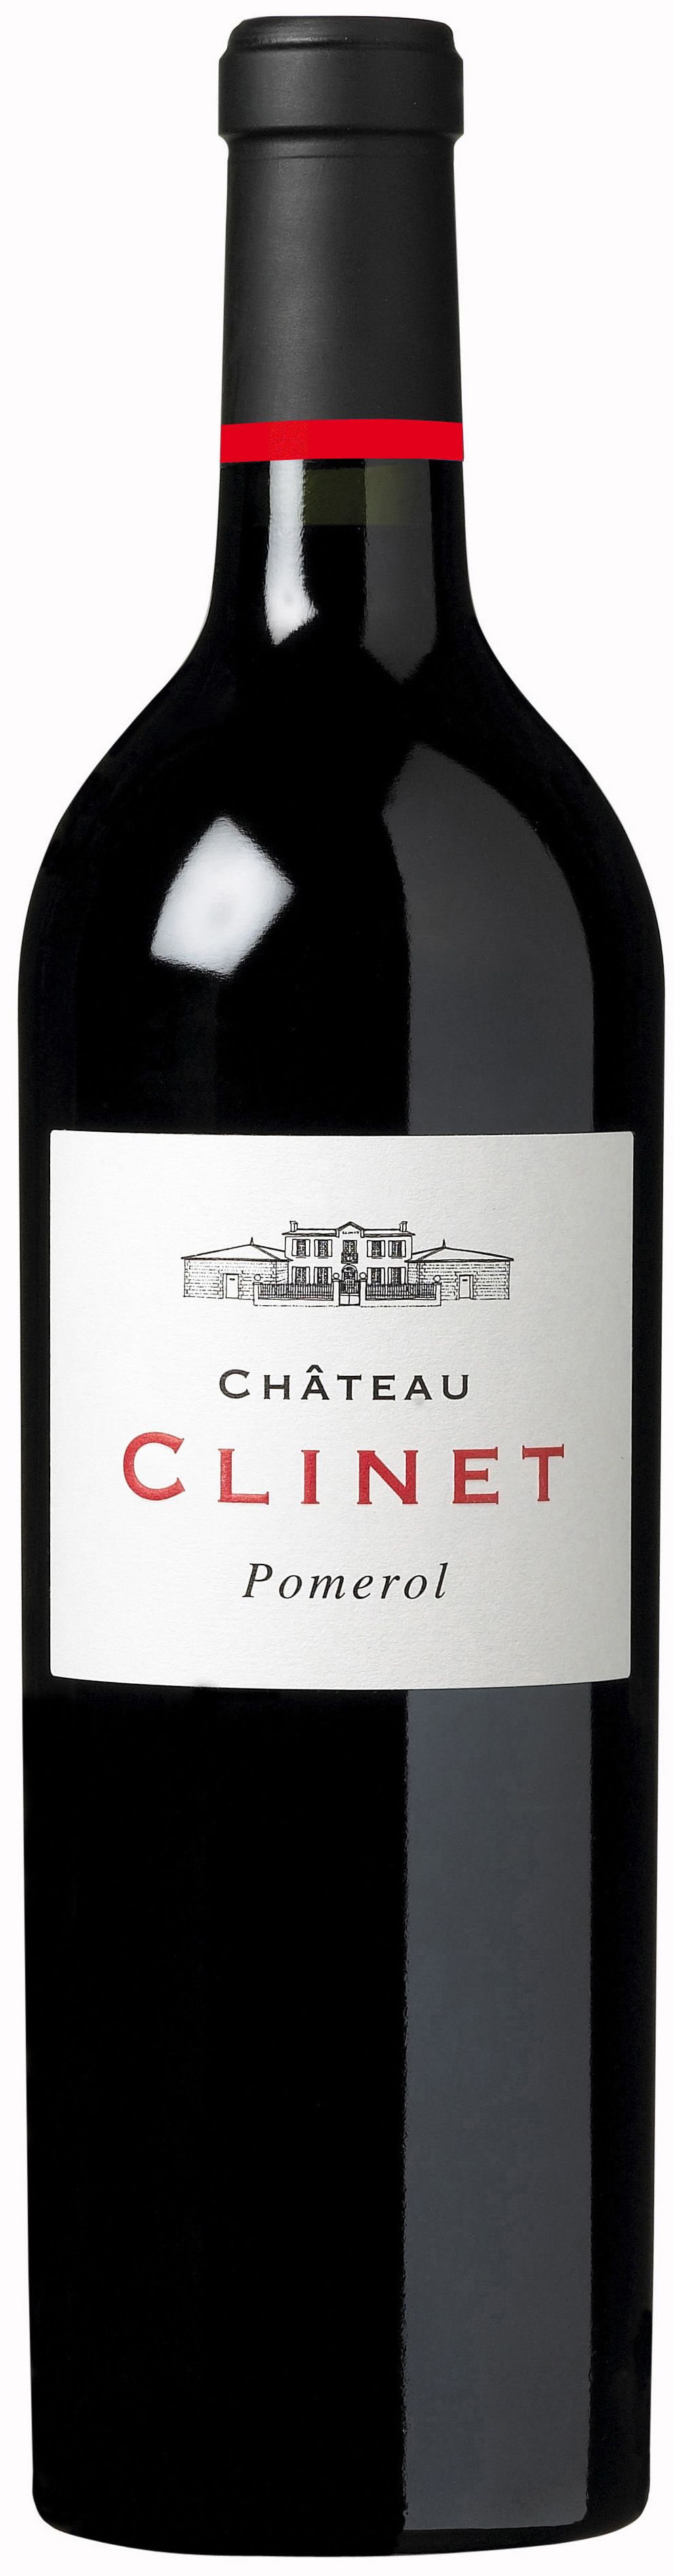 Chateau Clinet, 2001